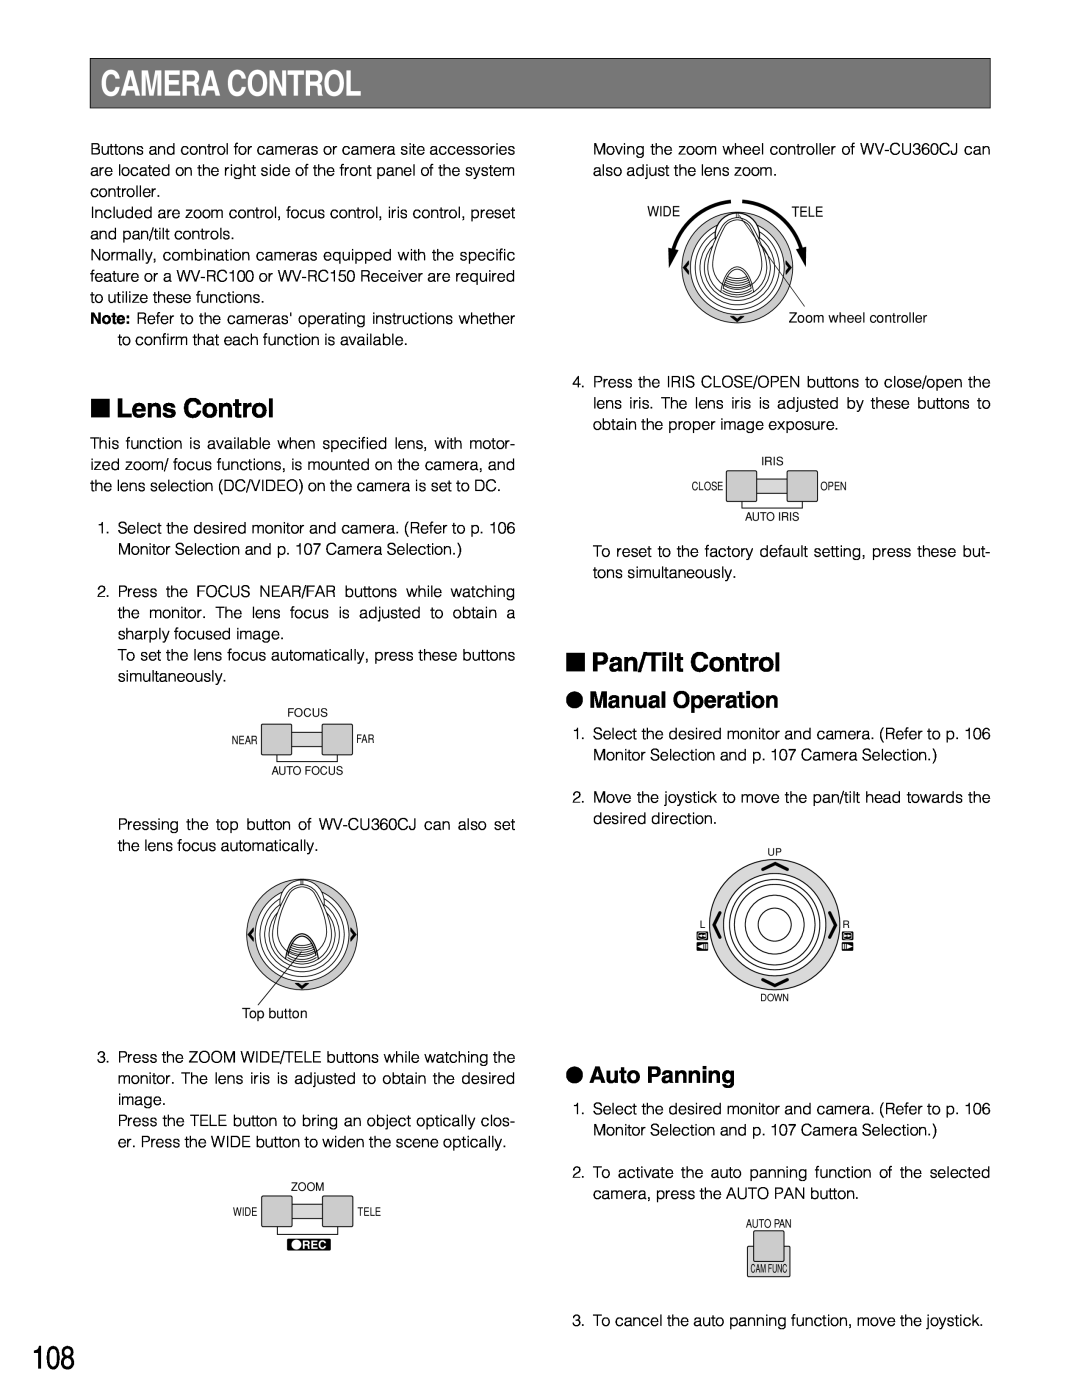 Panasonic WJ-SX150A manual Camera Control, Lens Control, Pan/Tilt Control, Manual Operation, Auto Panning 